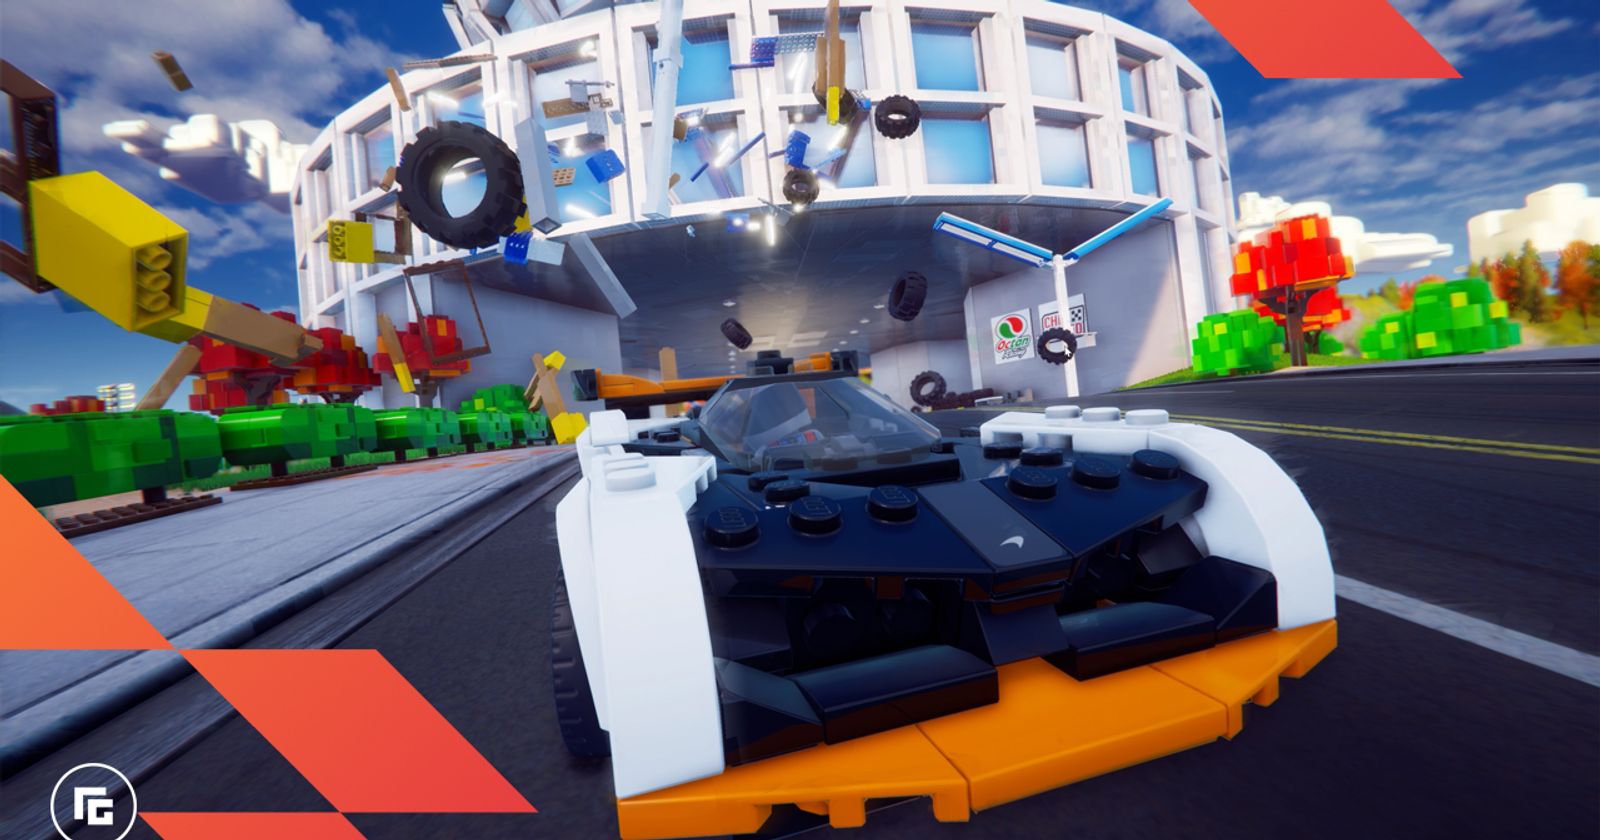 Multijogador  LEGO 2K Drive